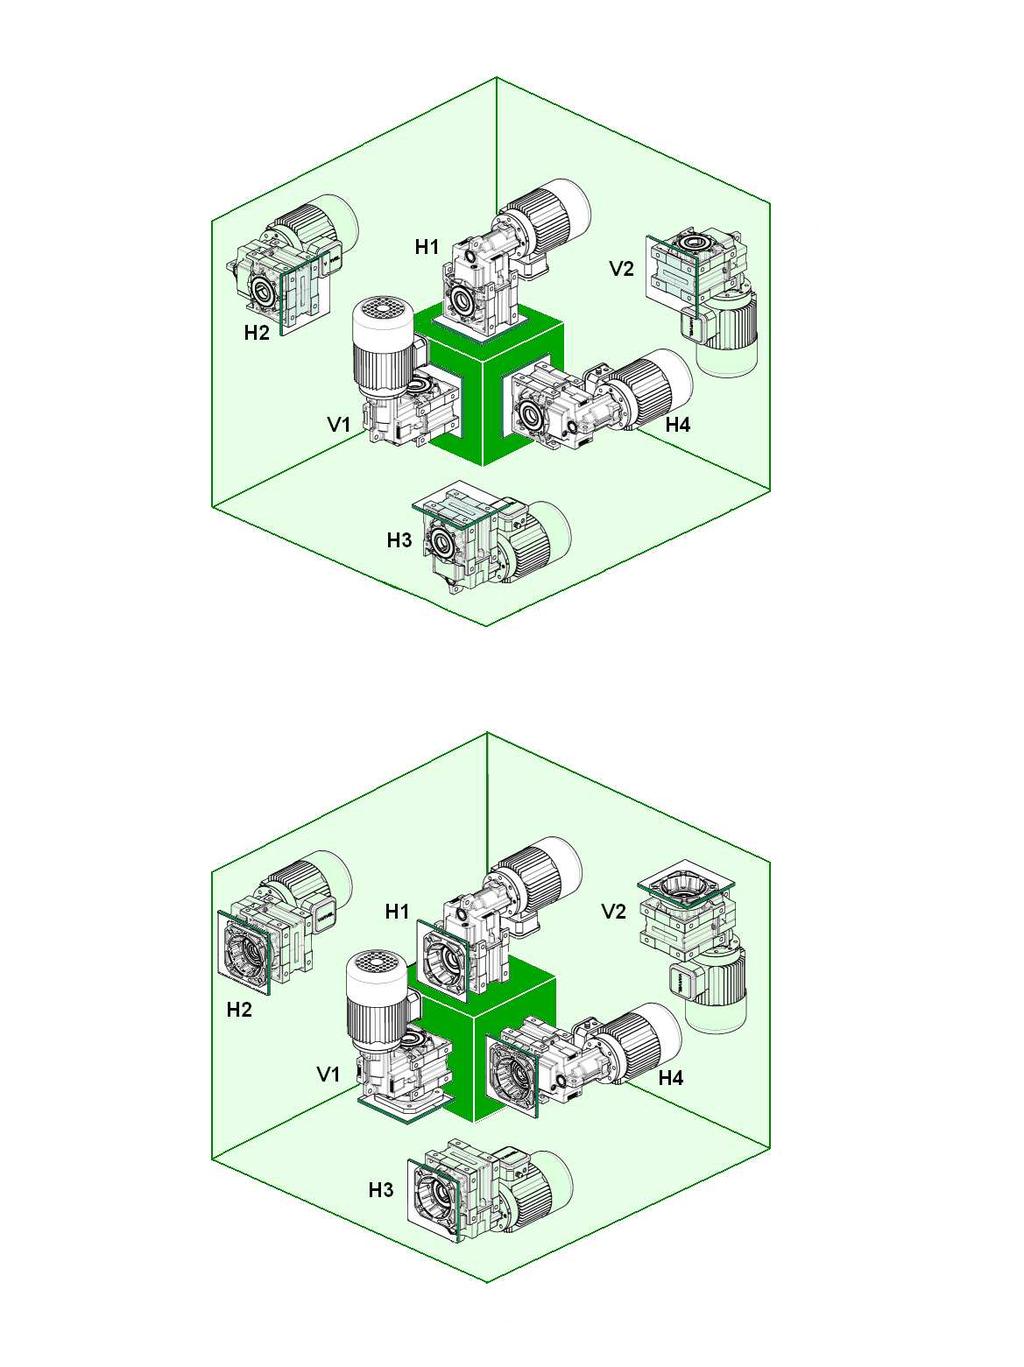 Getriebe - Gearboxes - Riduttori RN-RO-RV Einbaulagen - Mounting positions - Posizioni di montaggio B3